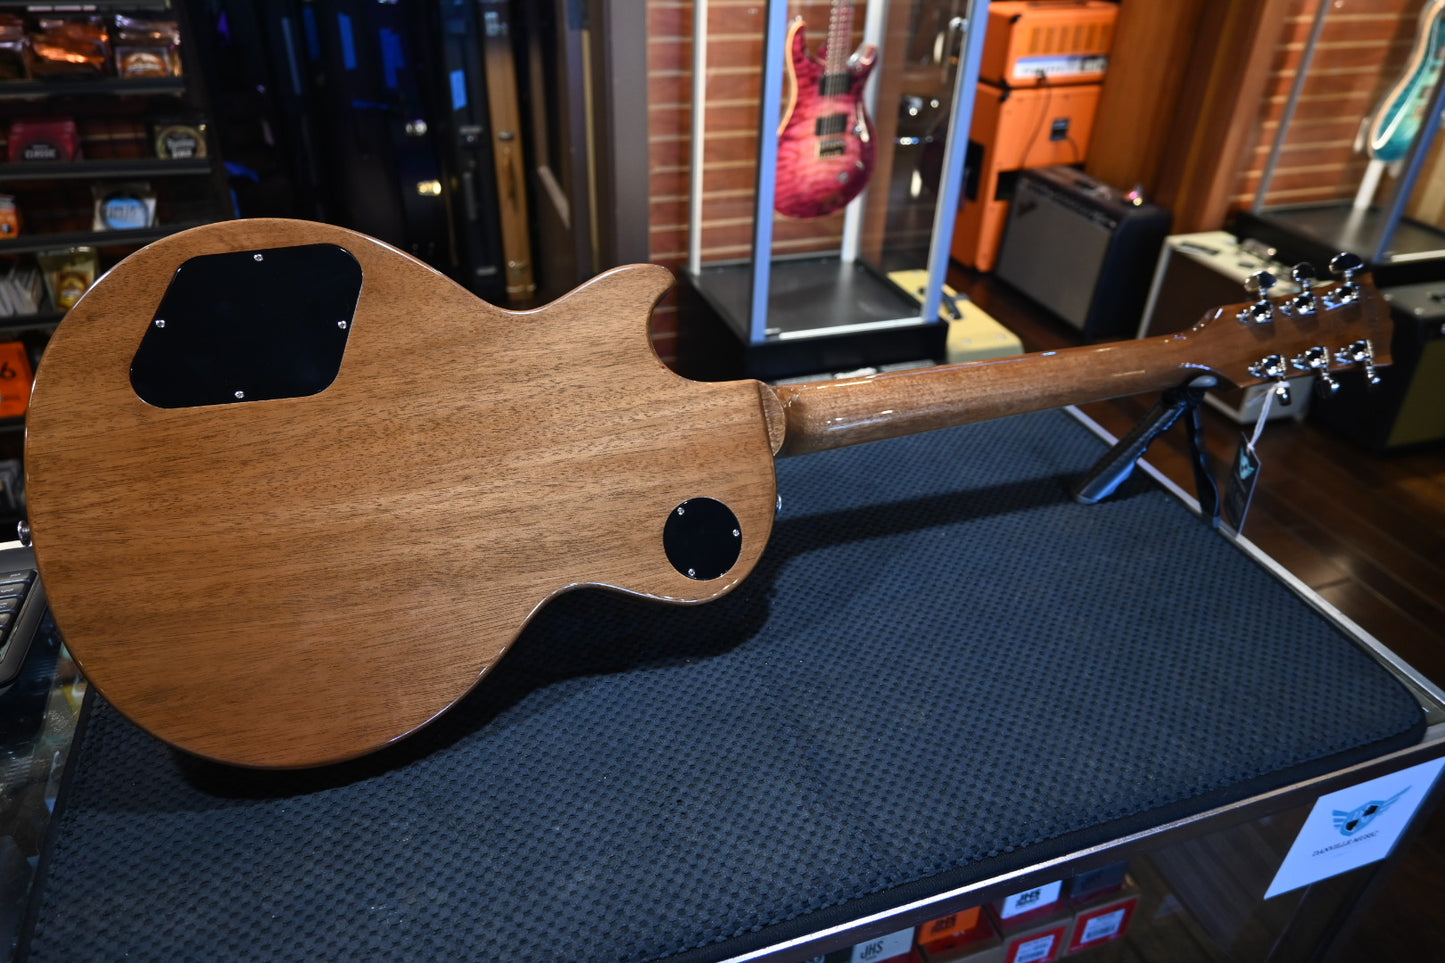 Gibson Les Paul Standard ‘60s Figured Top - Honey Amber Guitar #0036 - Danville Music